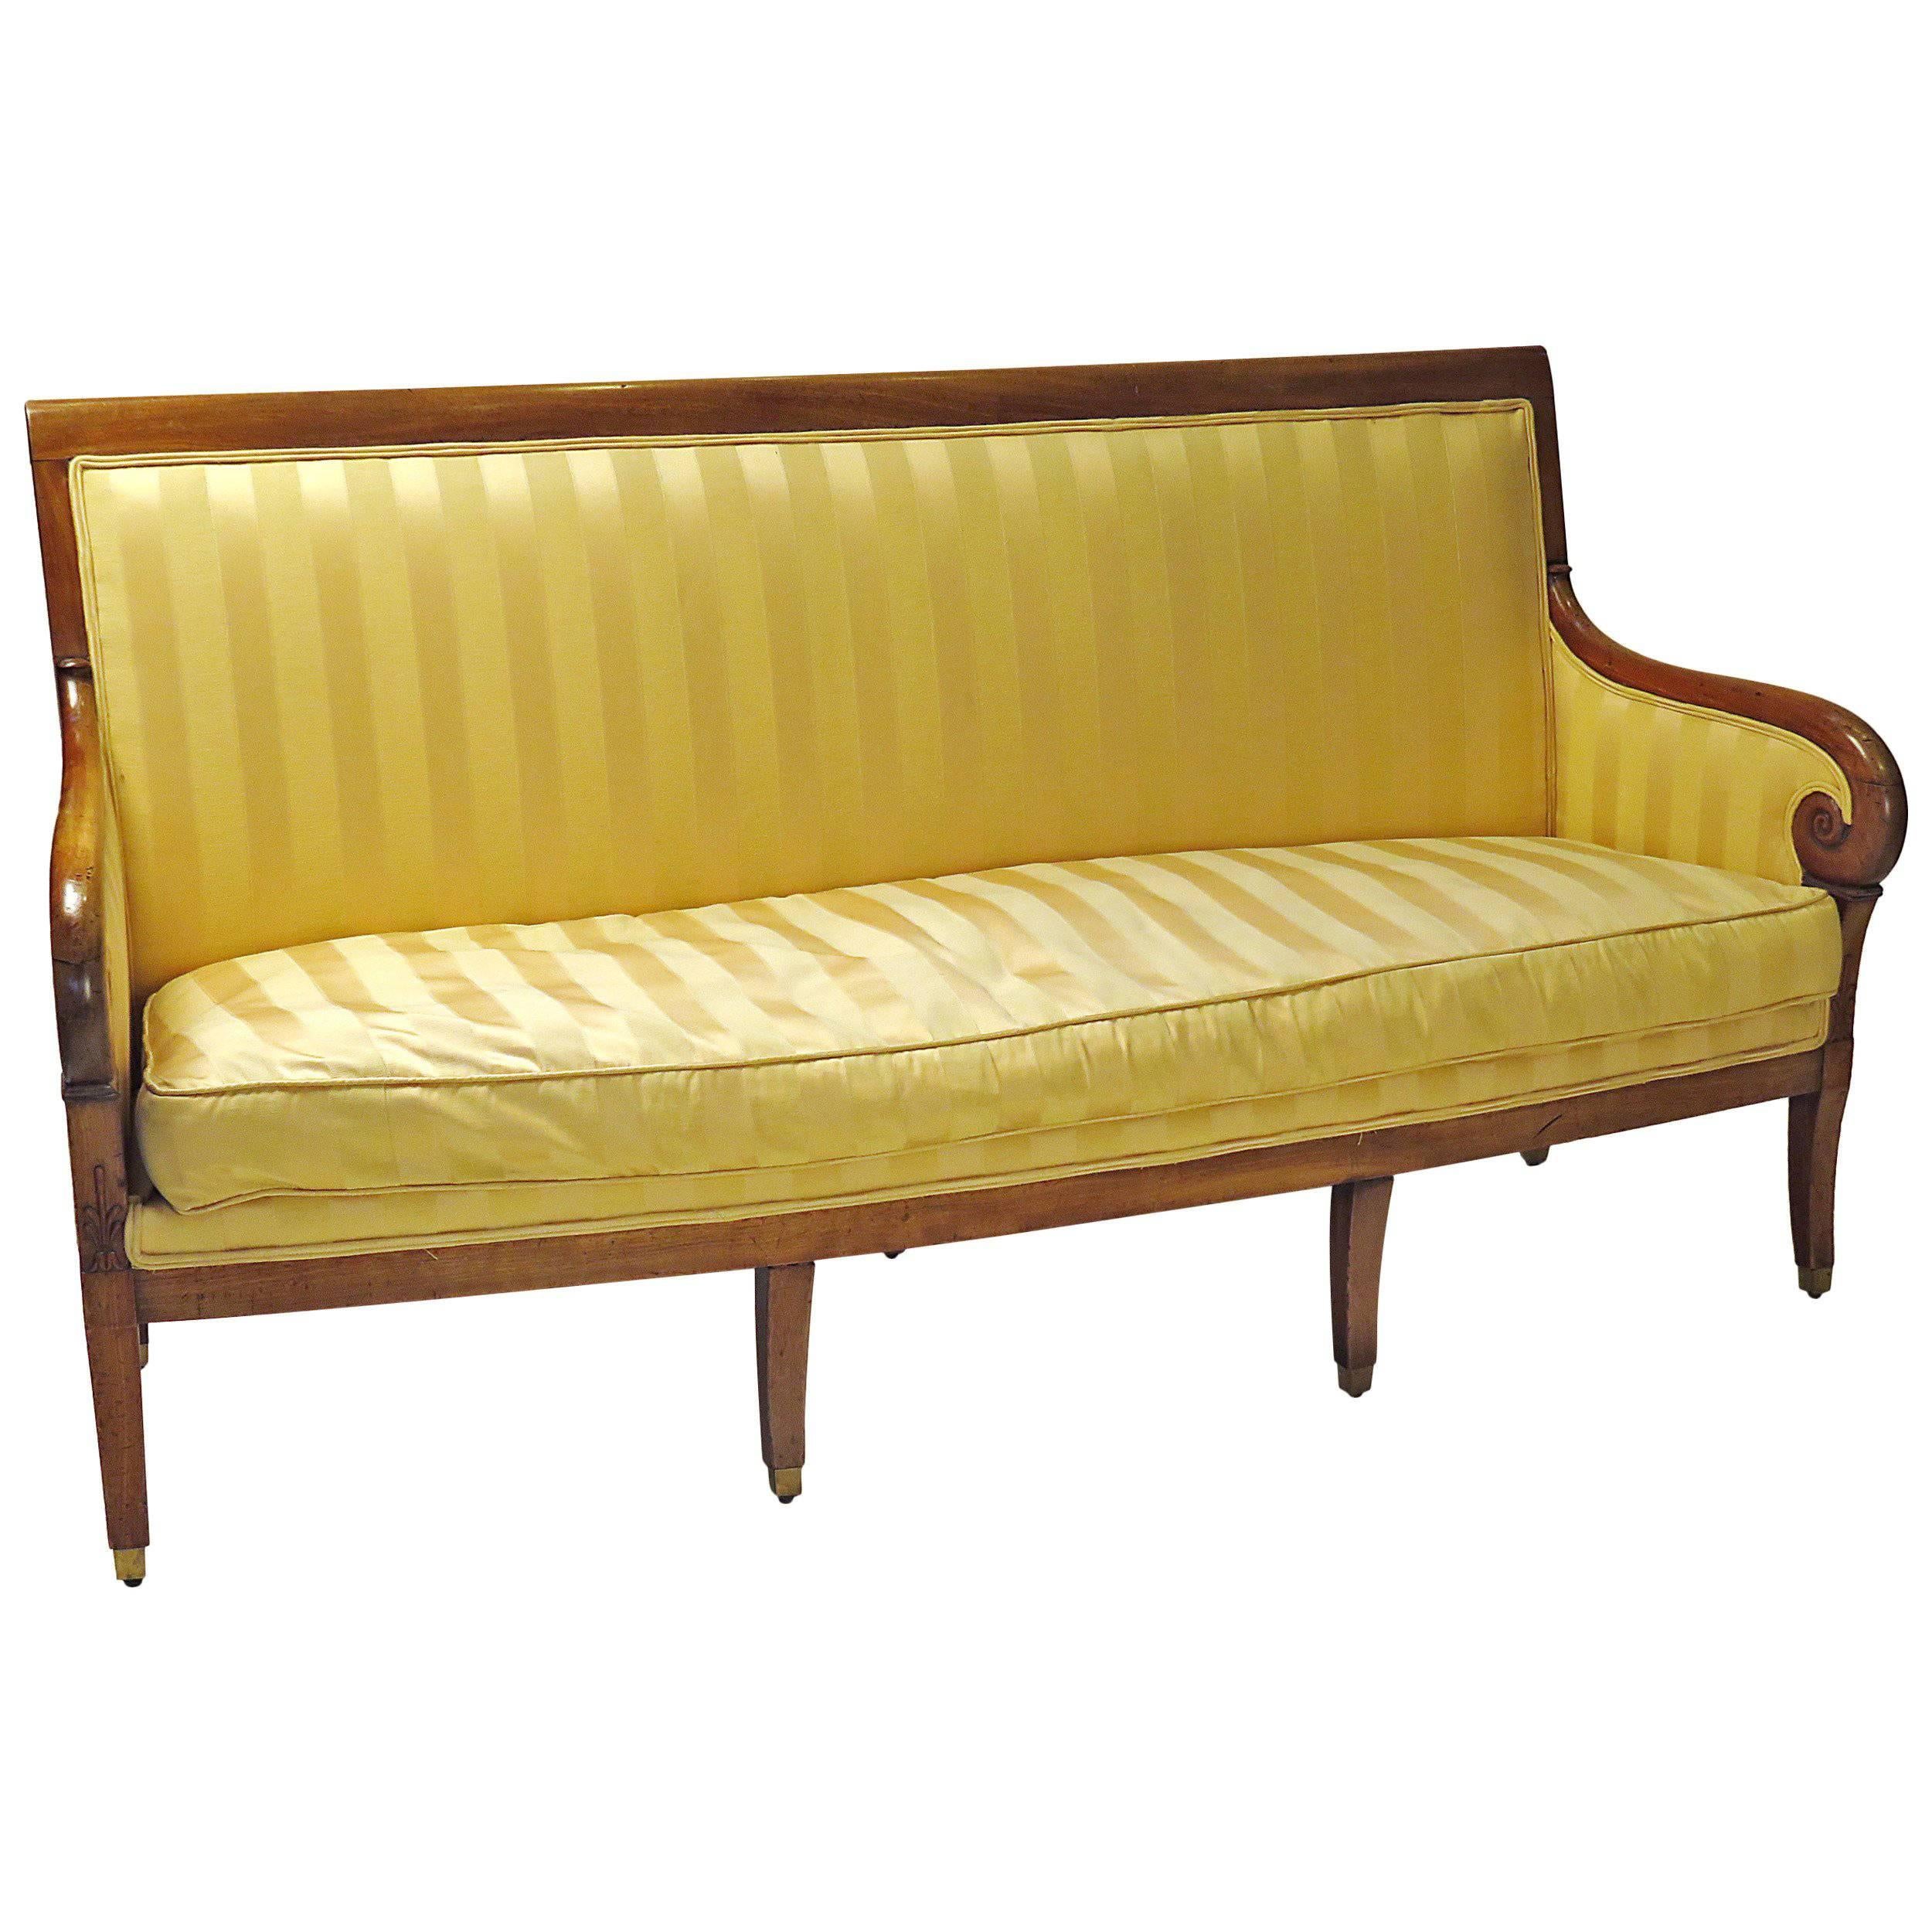 Elegant French Walnut Sofa circa 1820 Great Color and Patina